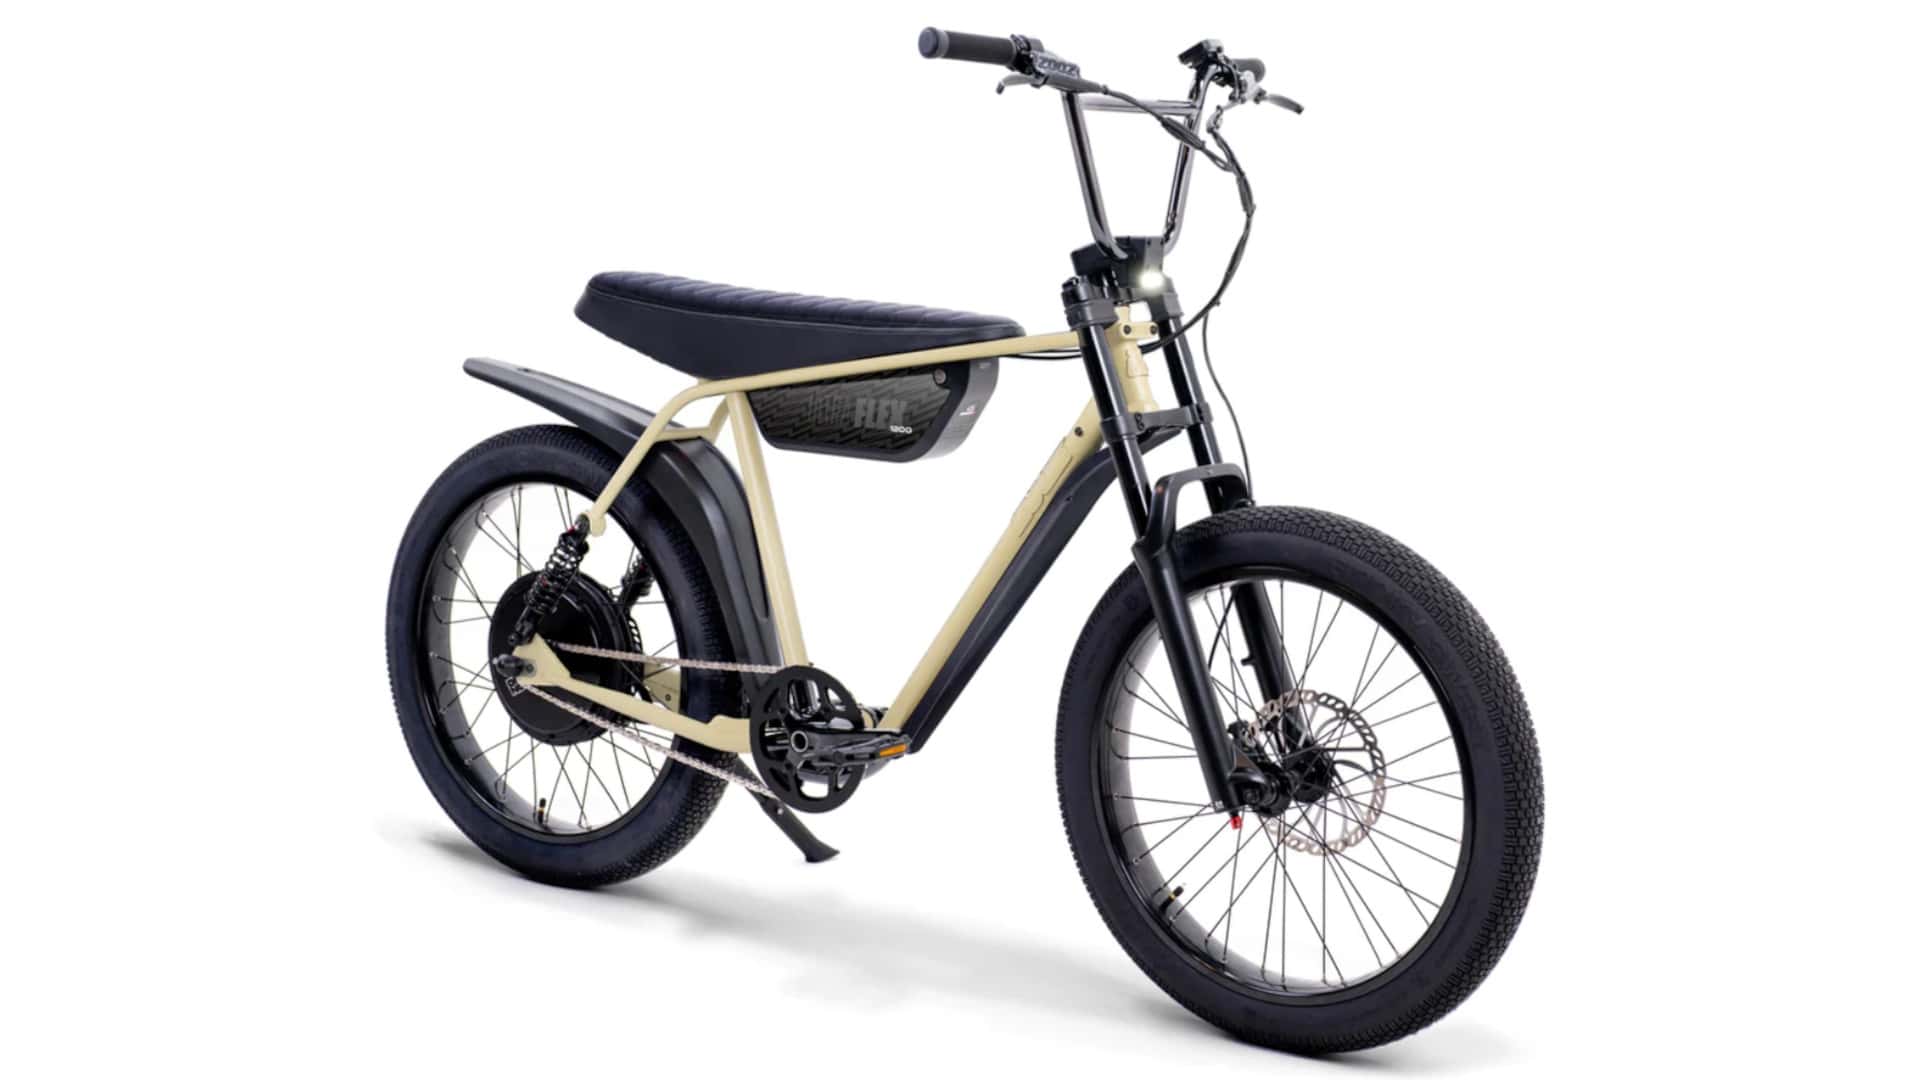 new zooz ultra flex 1200 e-bike promises versatility and excitement